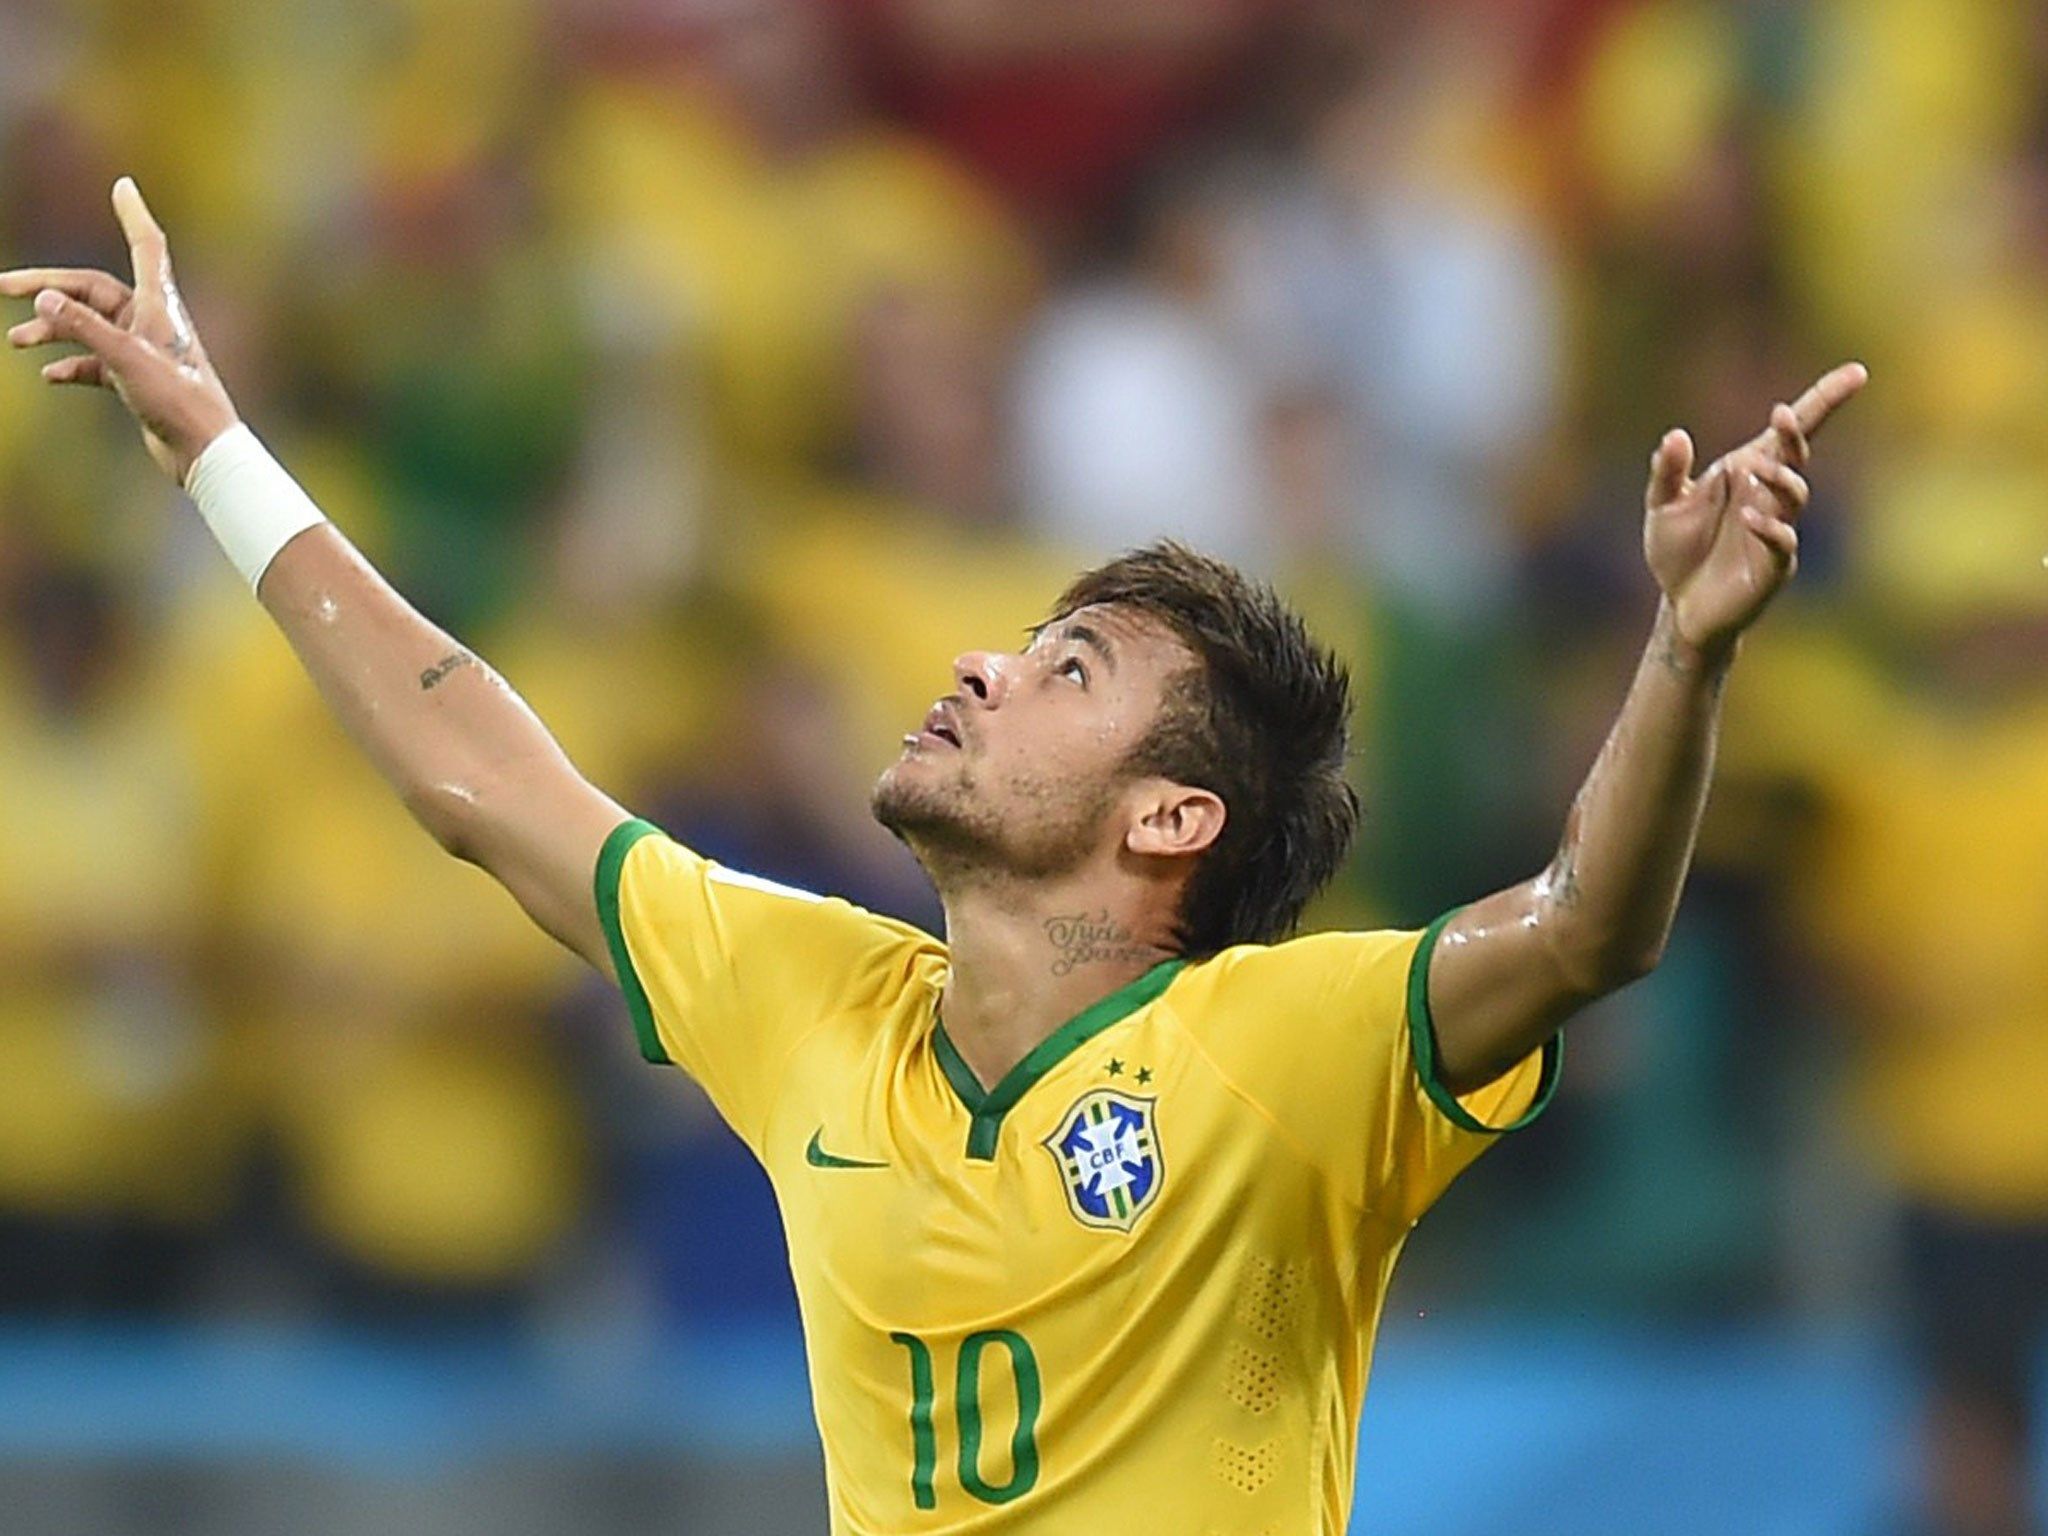 neymar image background. Neymar, Neymar image, Neymar jr